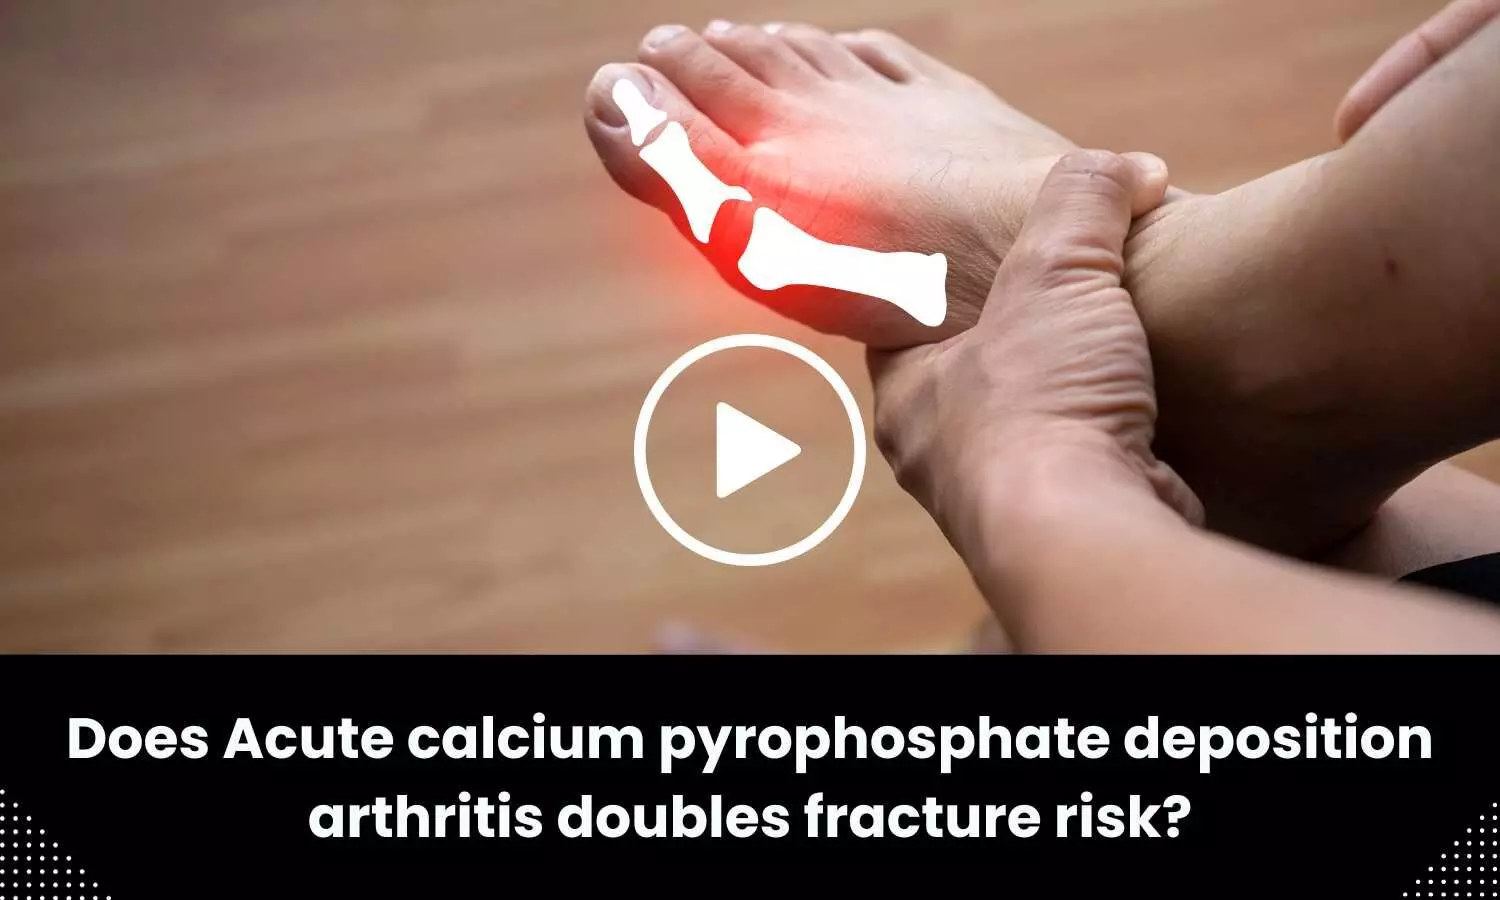 Does Acute calcium pyrophosphate deposition arthritis doubles fracture risk?